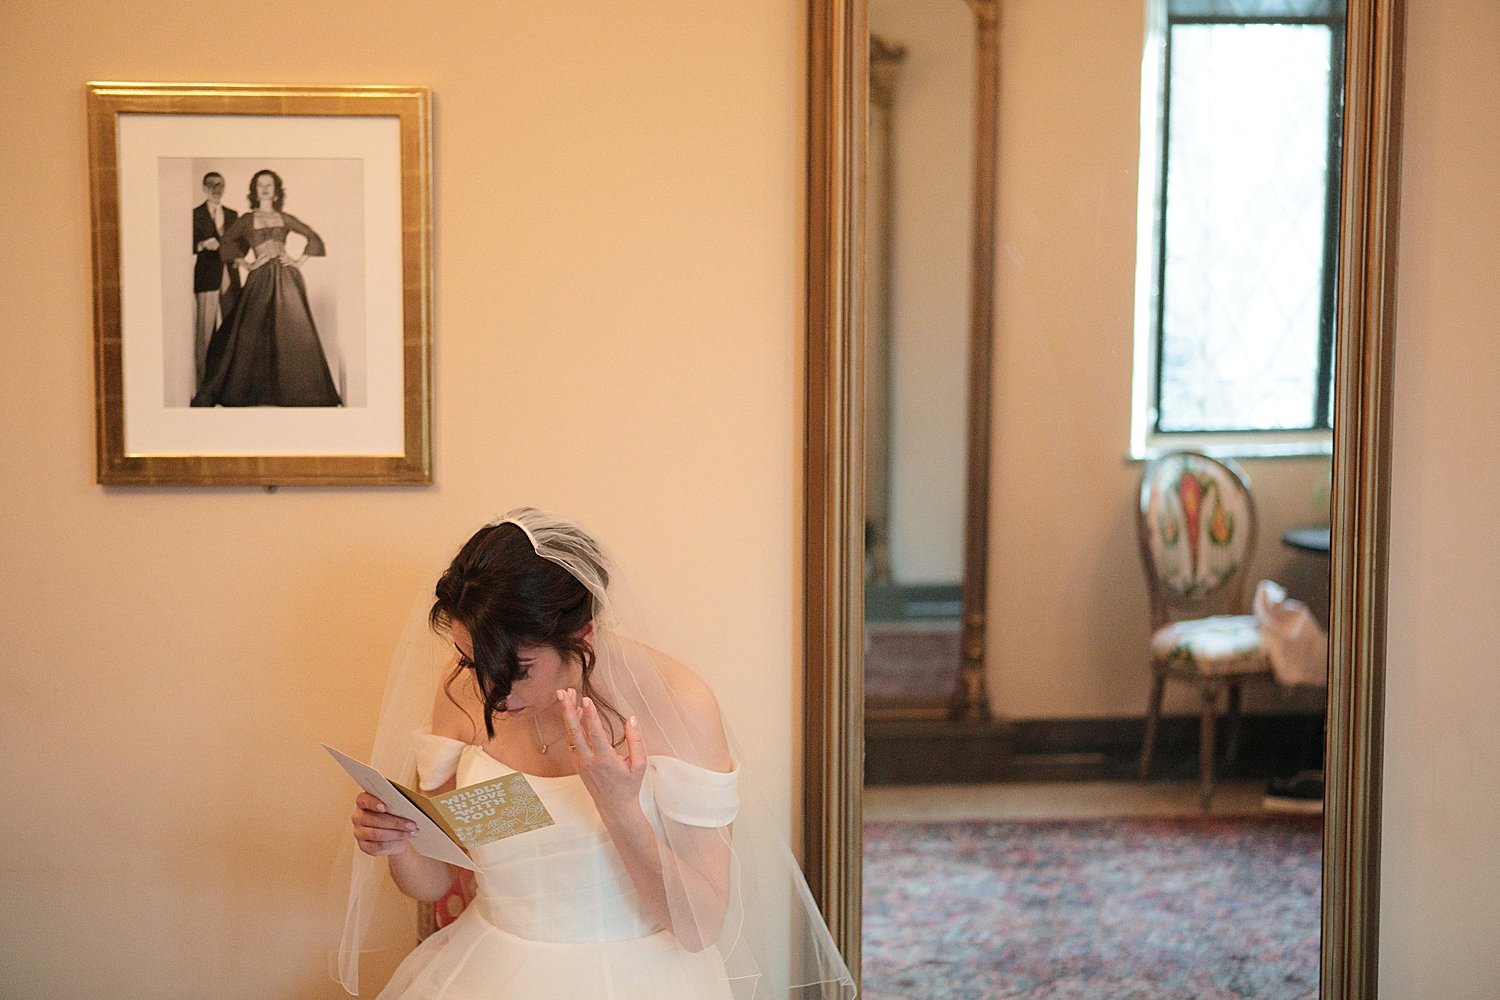 Chicago art musuem documentary wedding photographer  0017.jpg